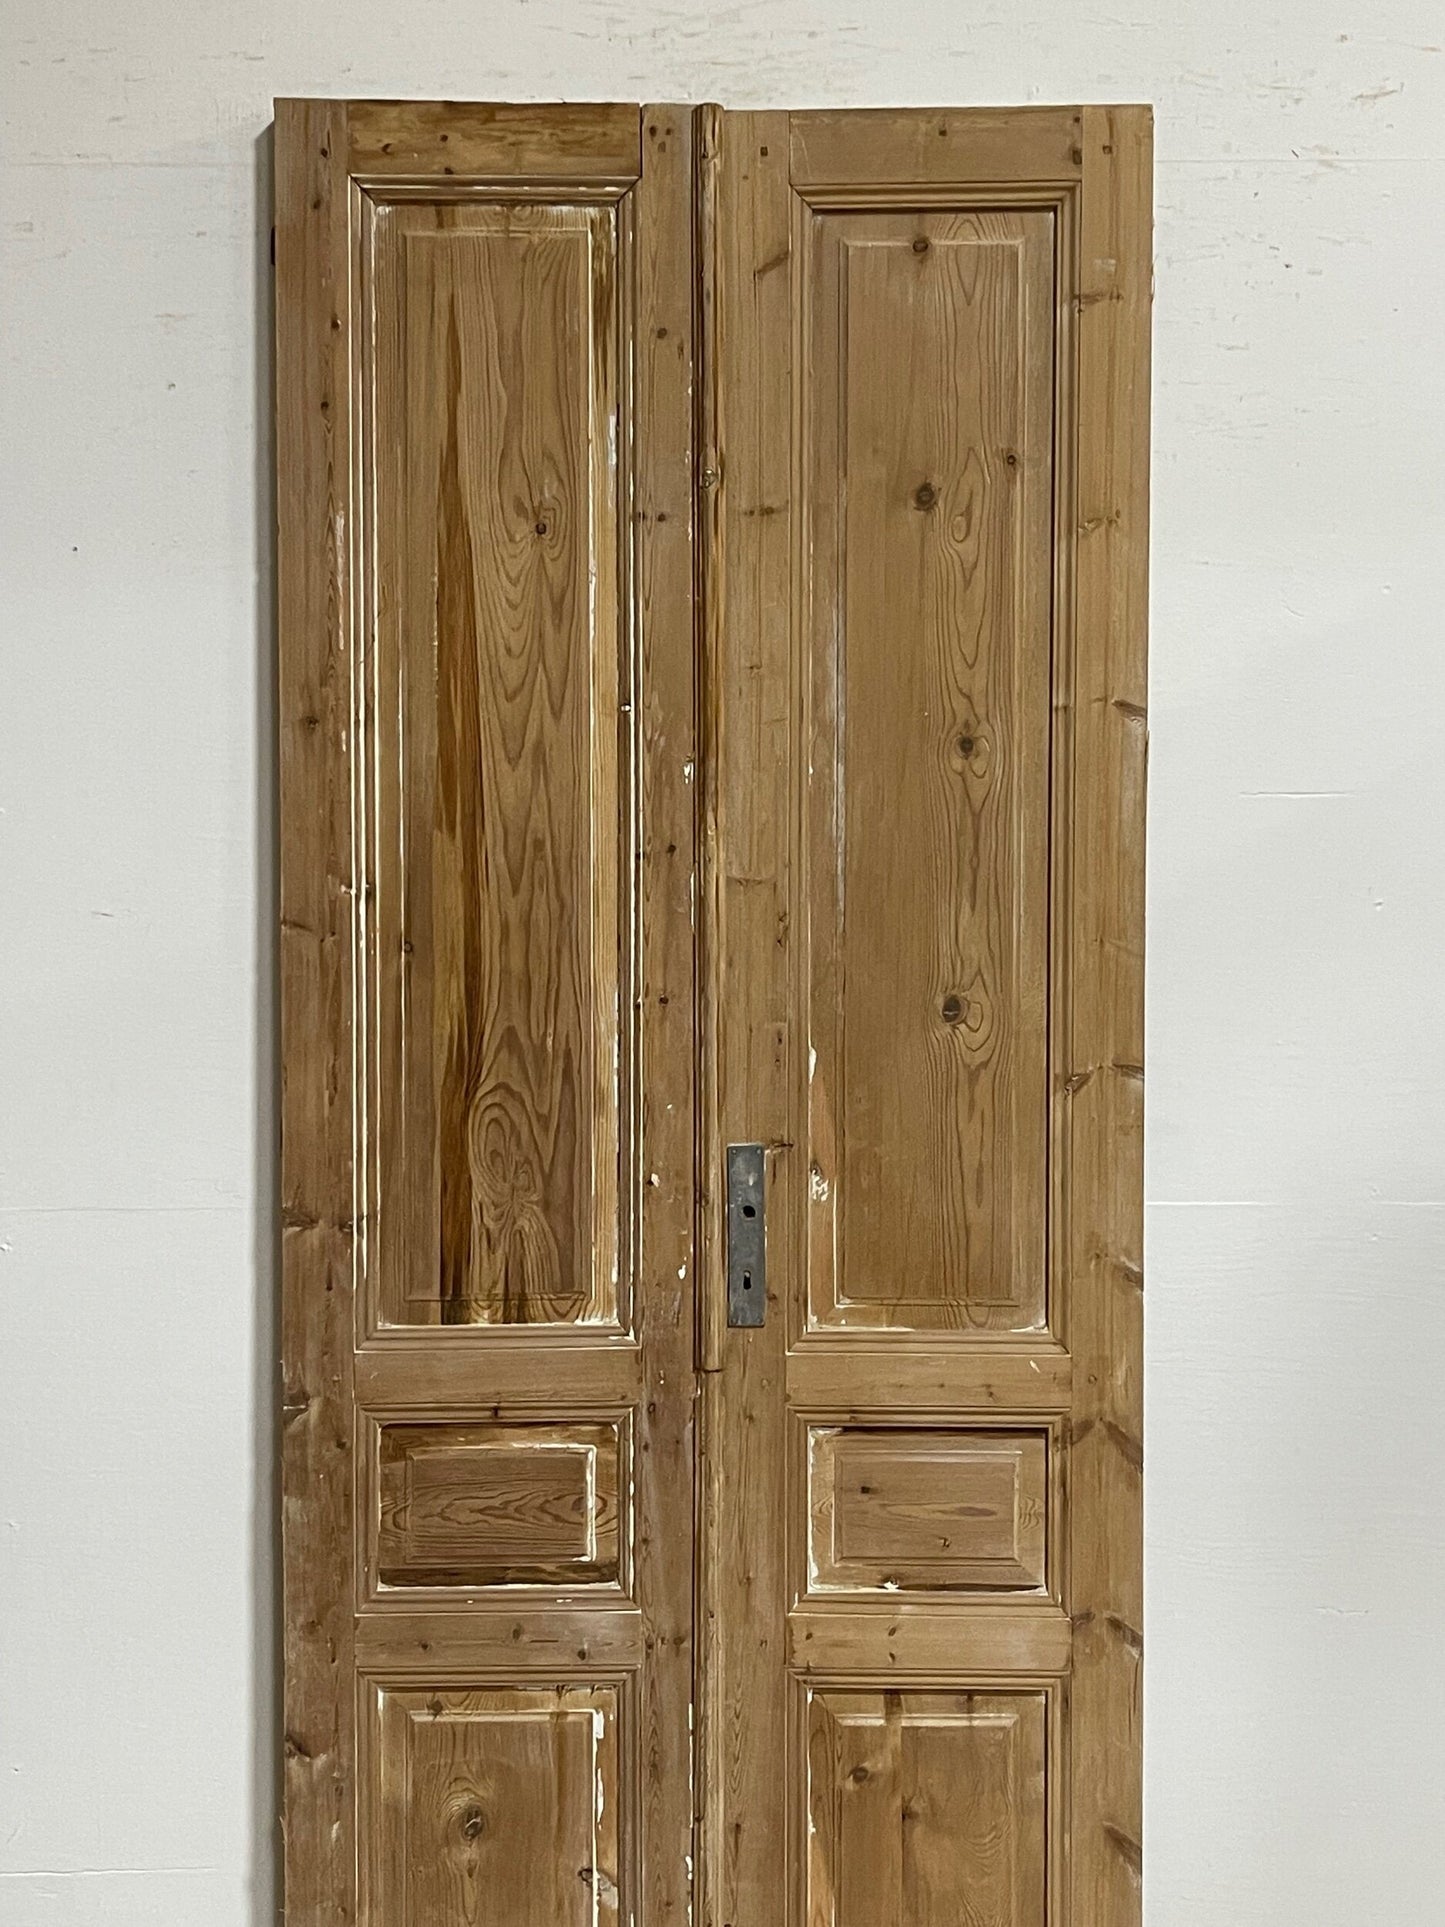 Antique French doors (98x39.5) H0118s